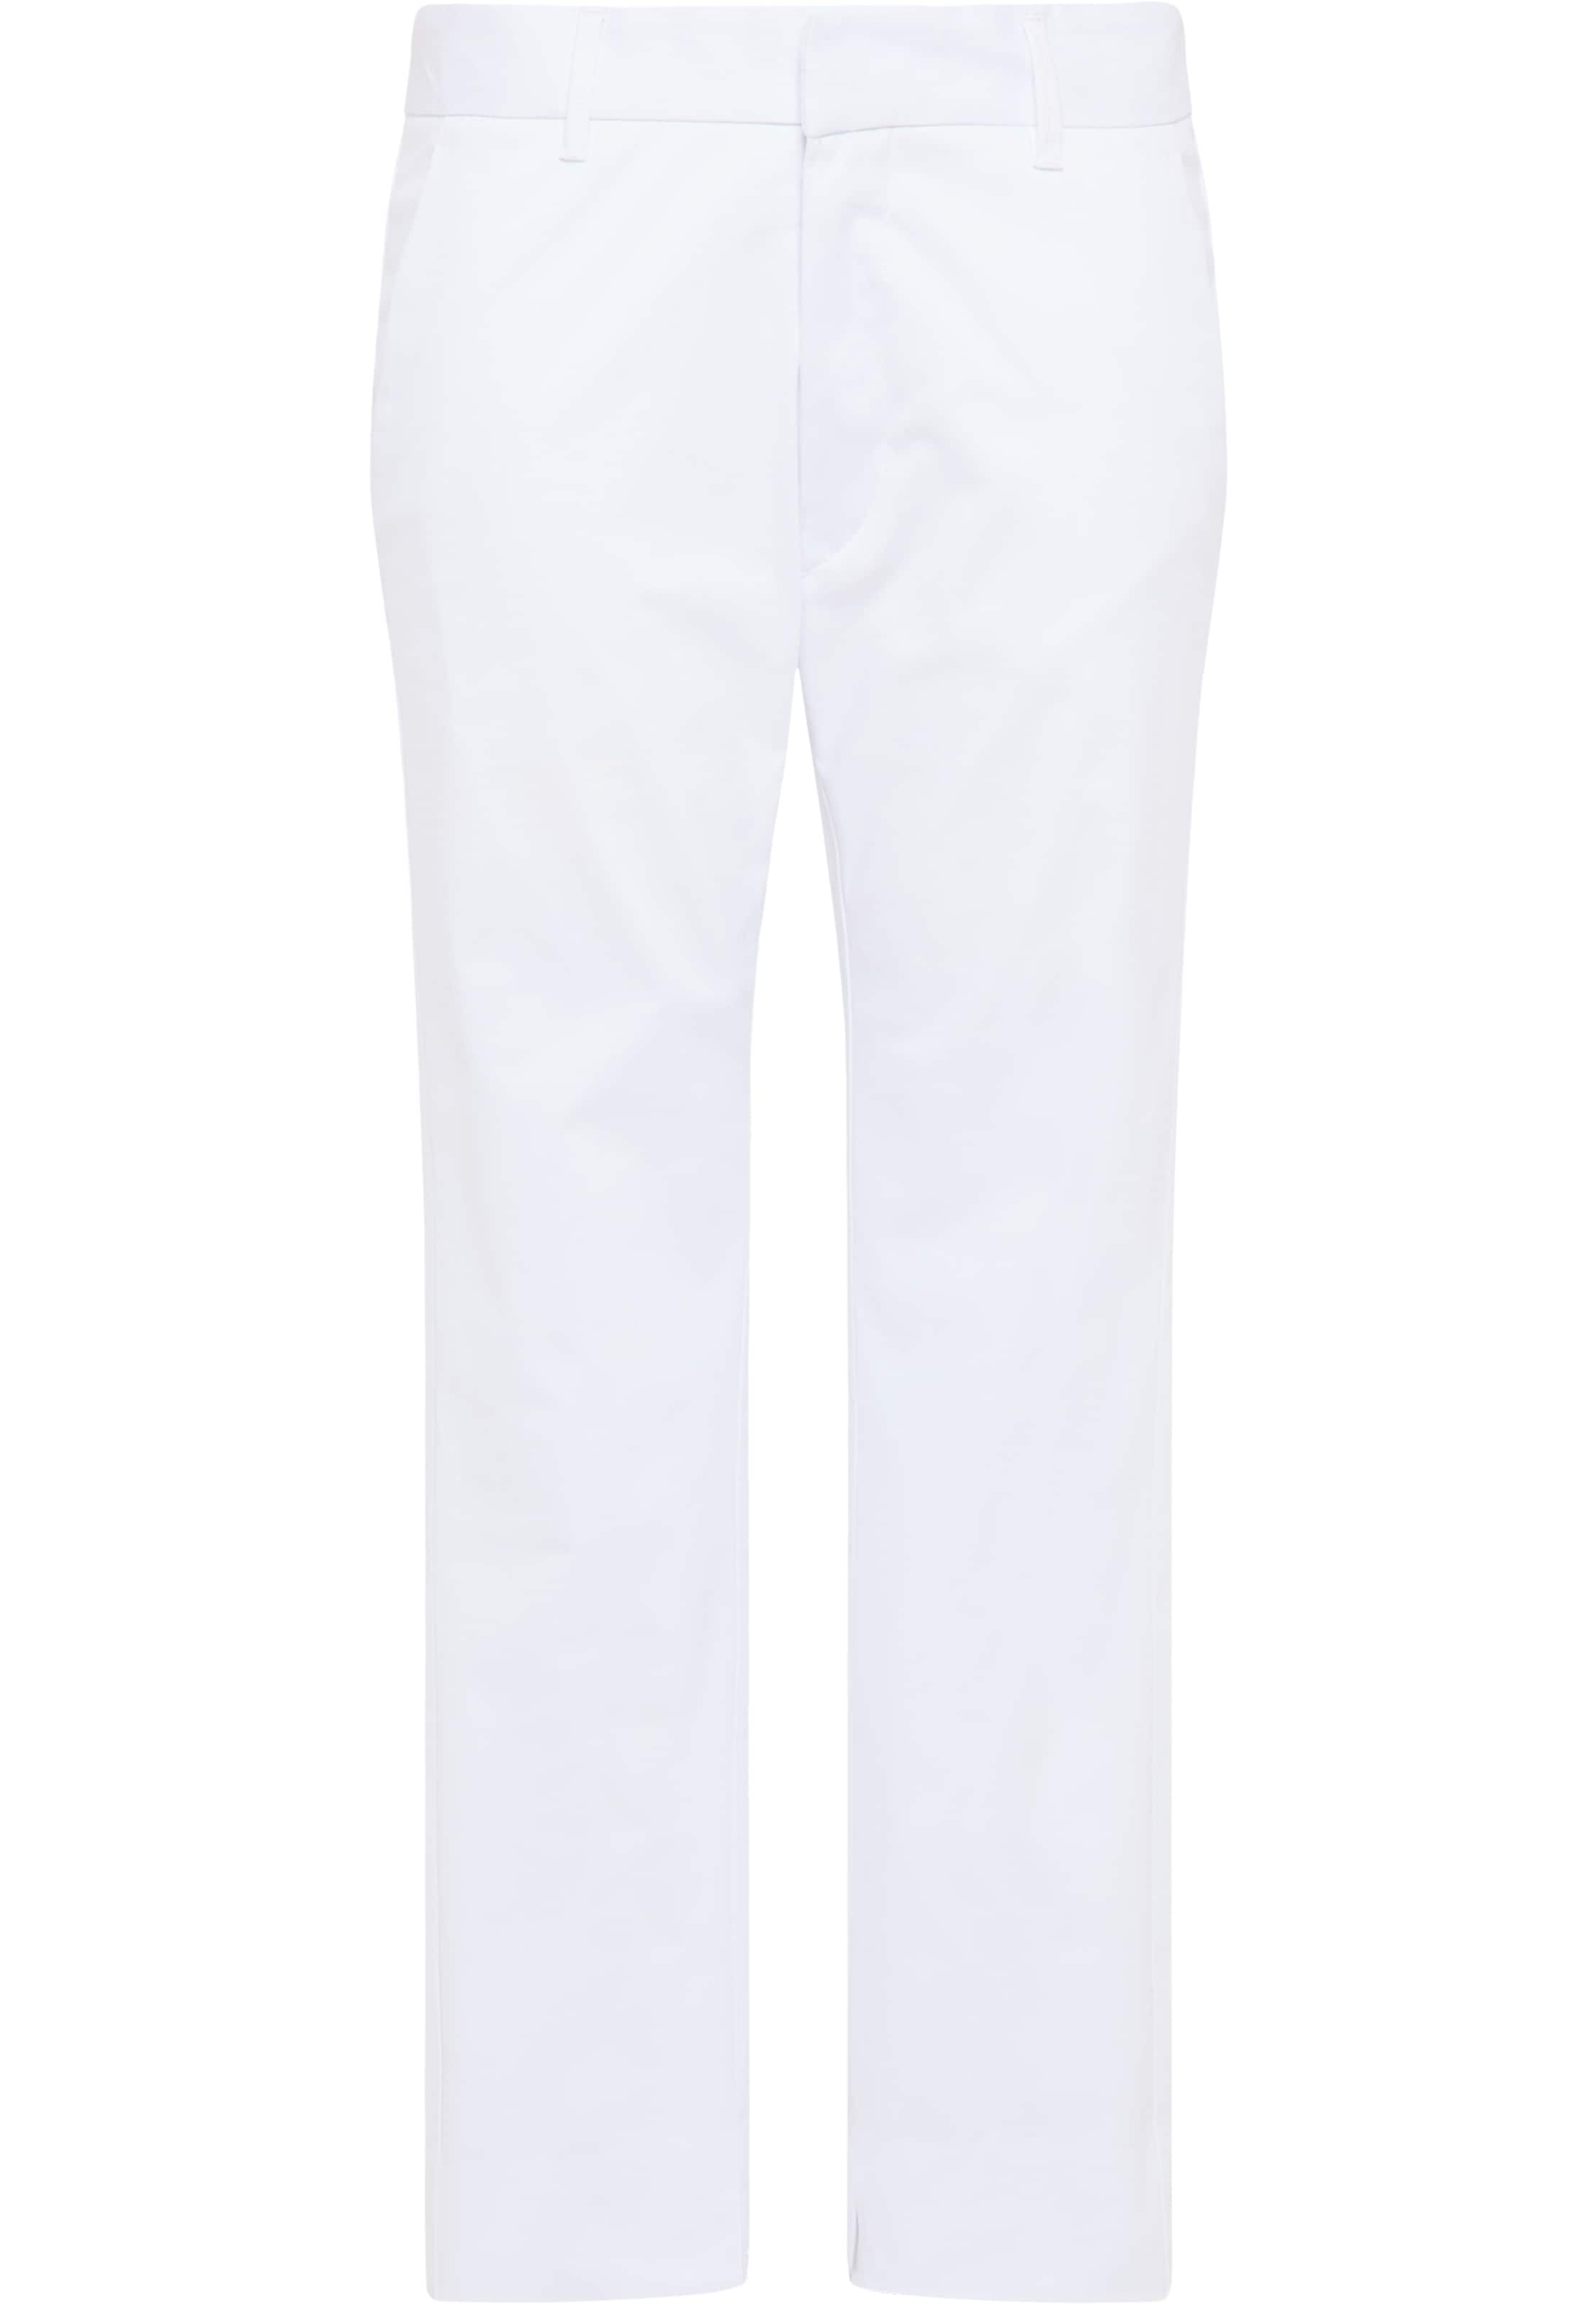 BcMUz Taglie comode DreiMaster Maritim Pantaloni in Bianco 